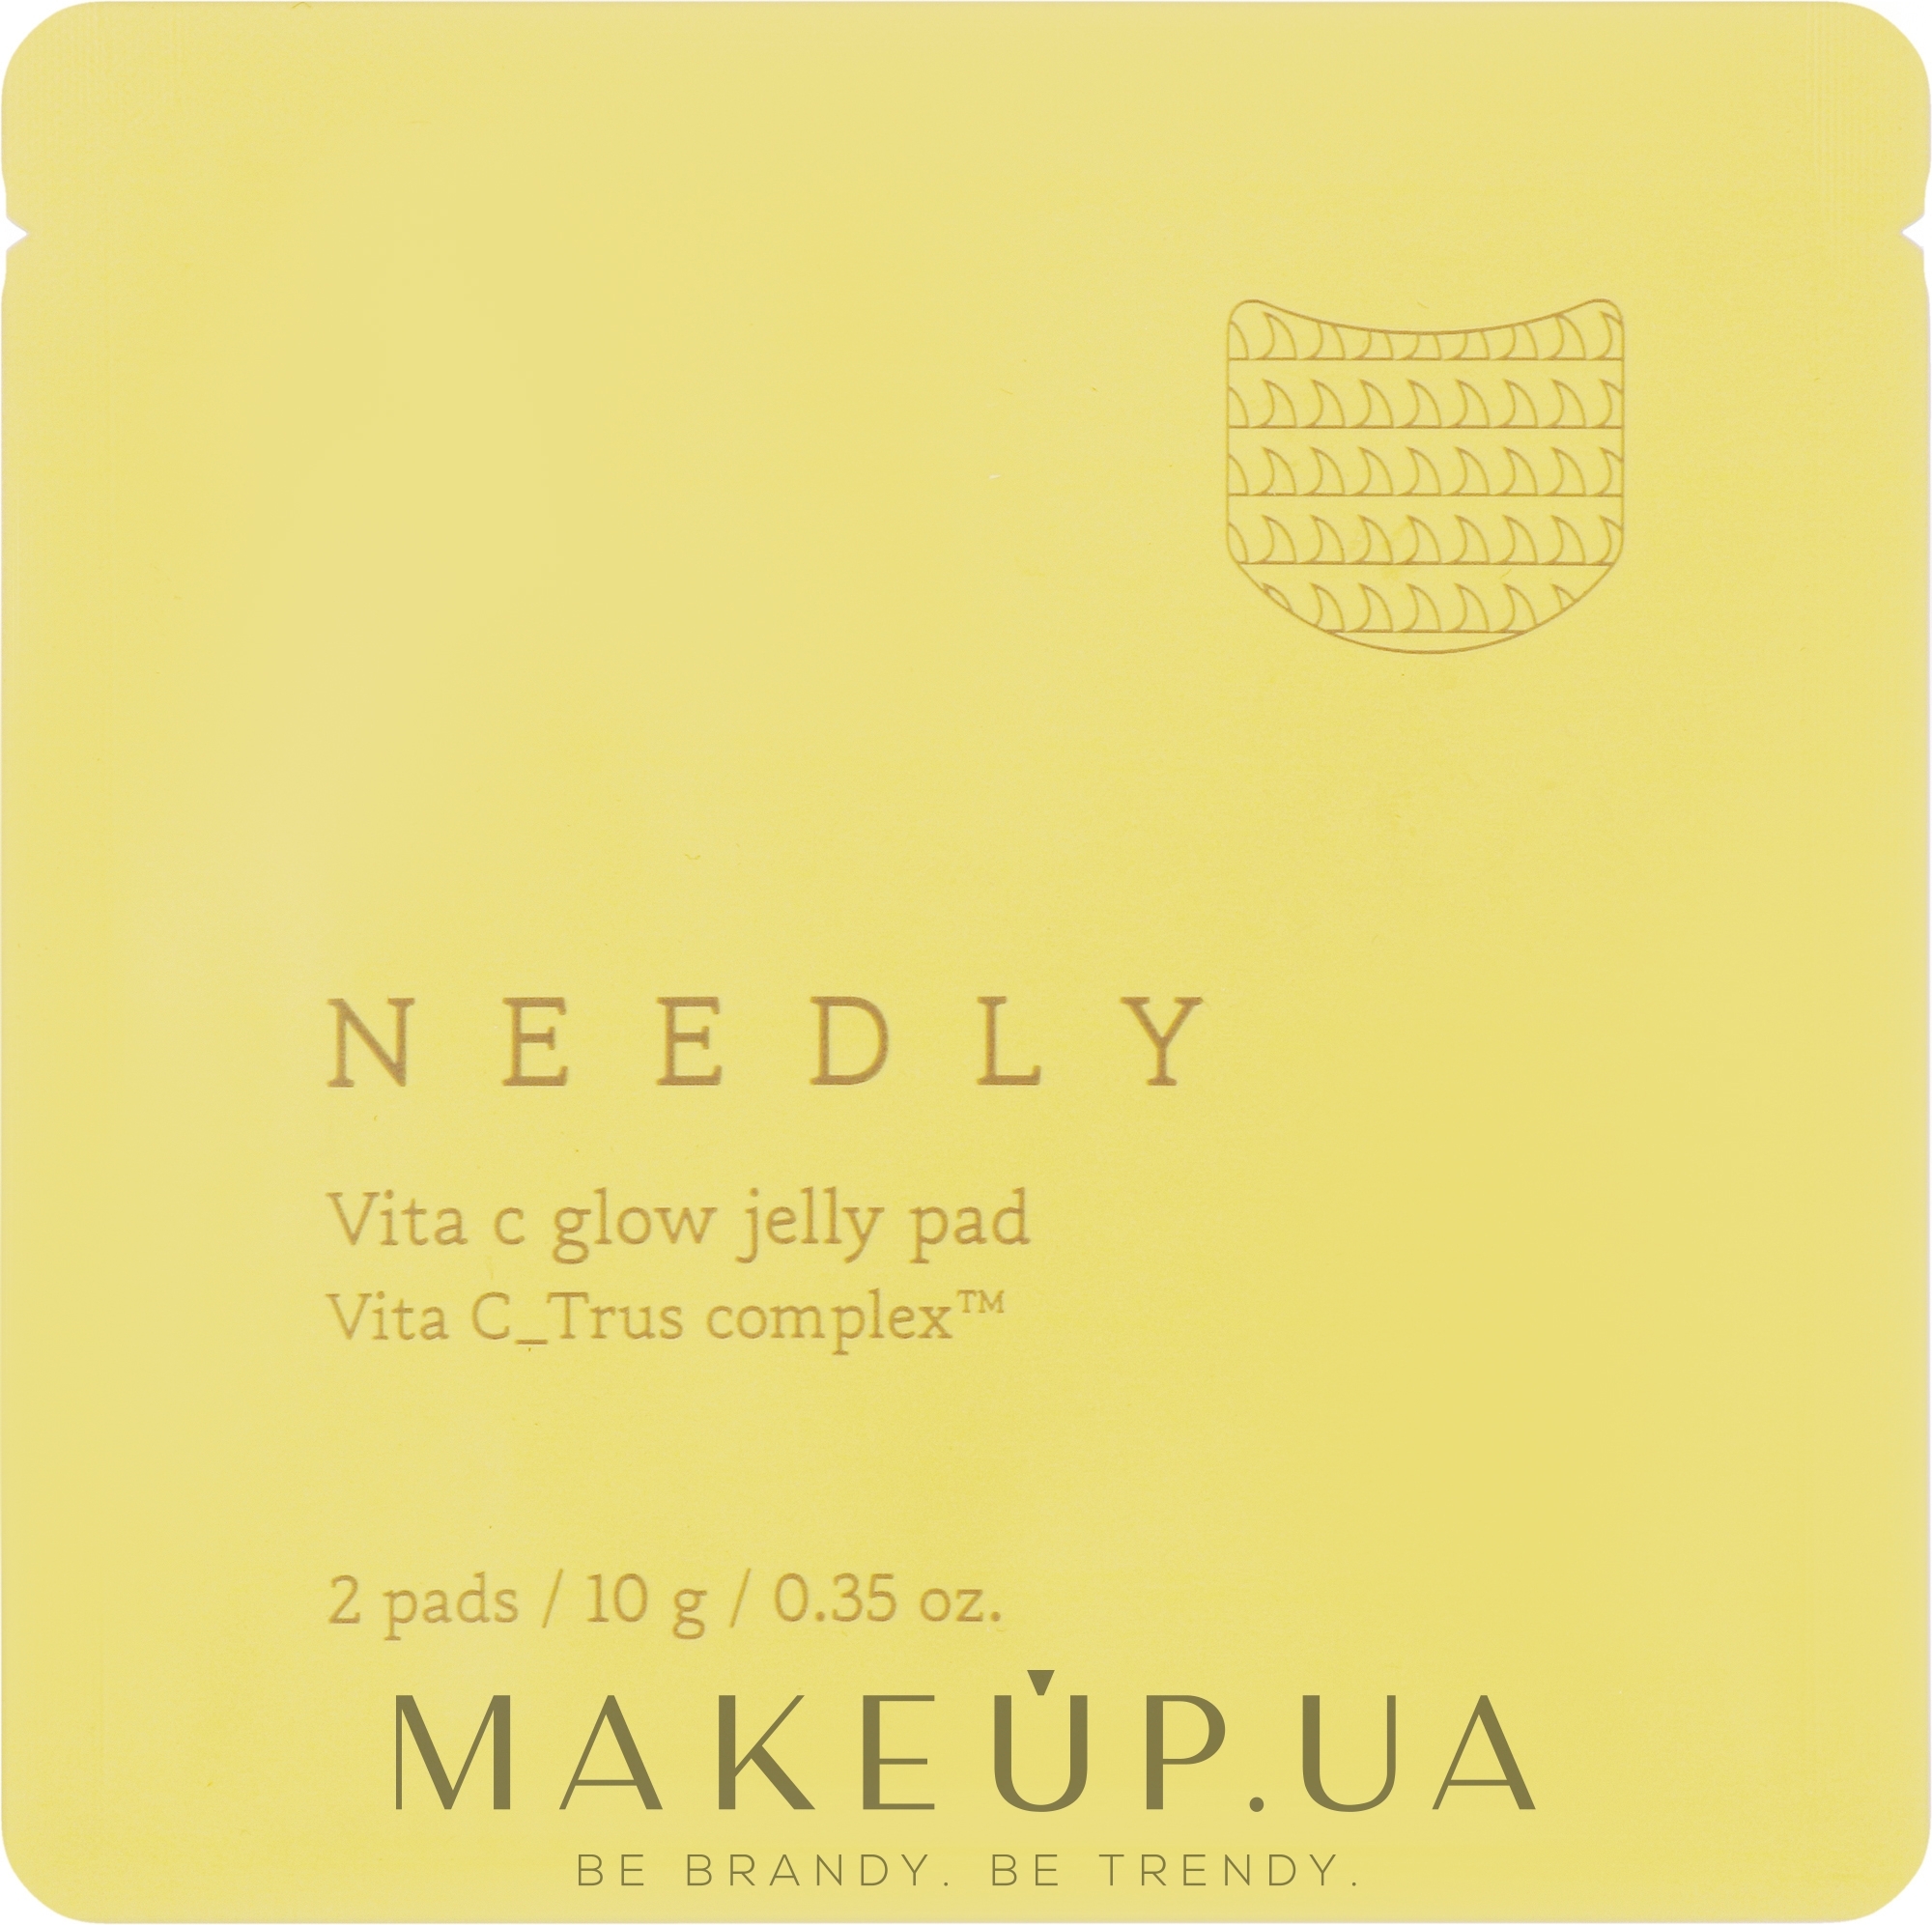 Увлажняющие тонер-педы для сияния кожи - Needly Vita C Glow Jelly Pad (пробник) — фото 2шт